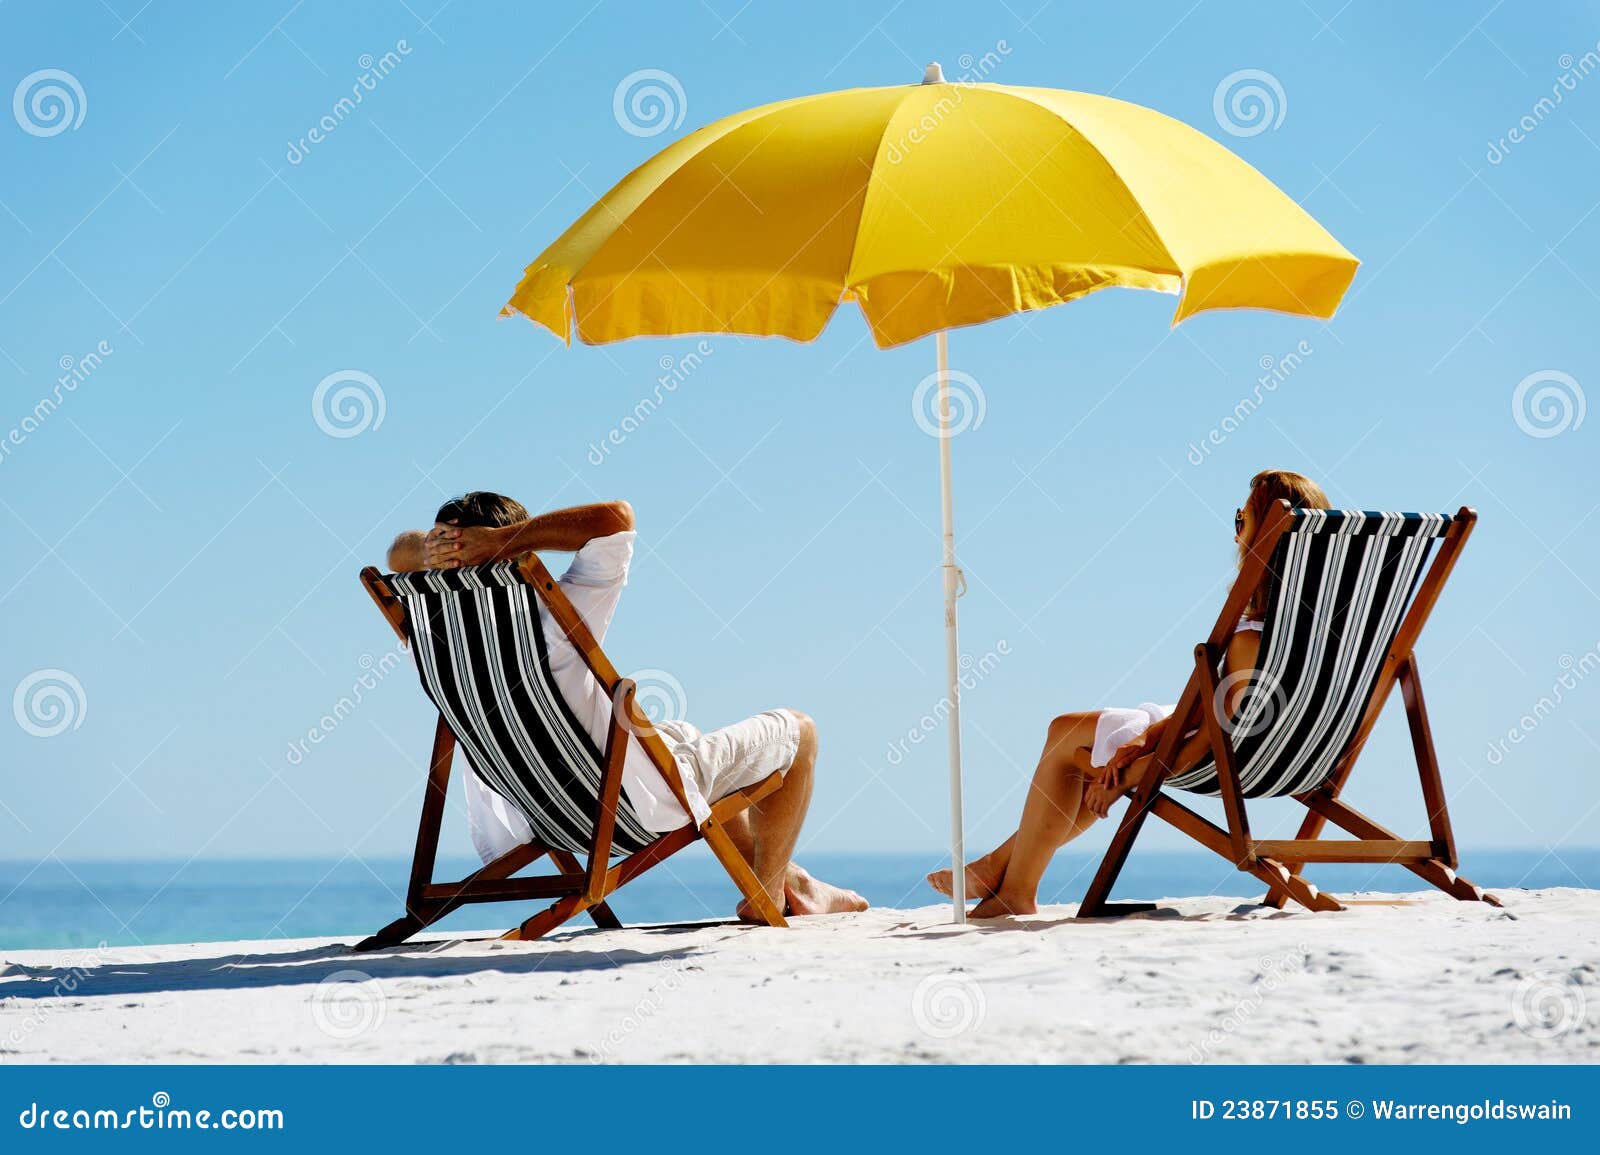 beach summer umbrella